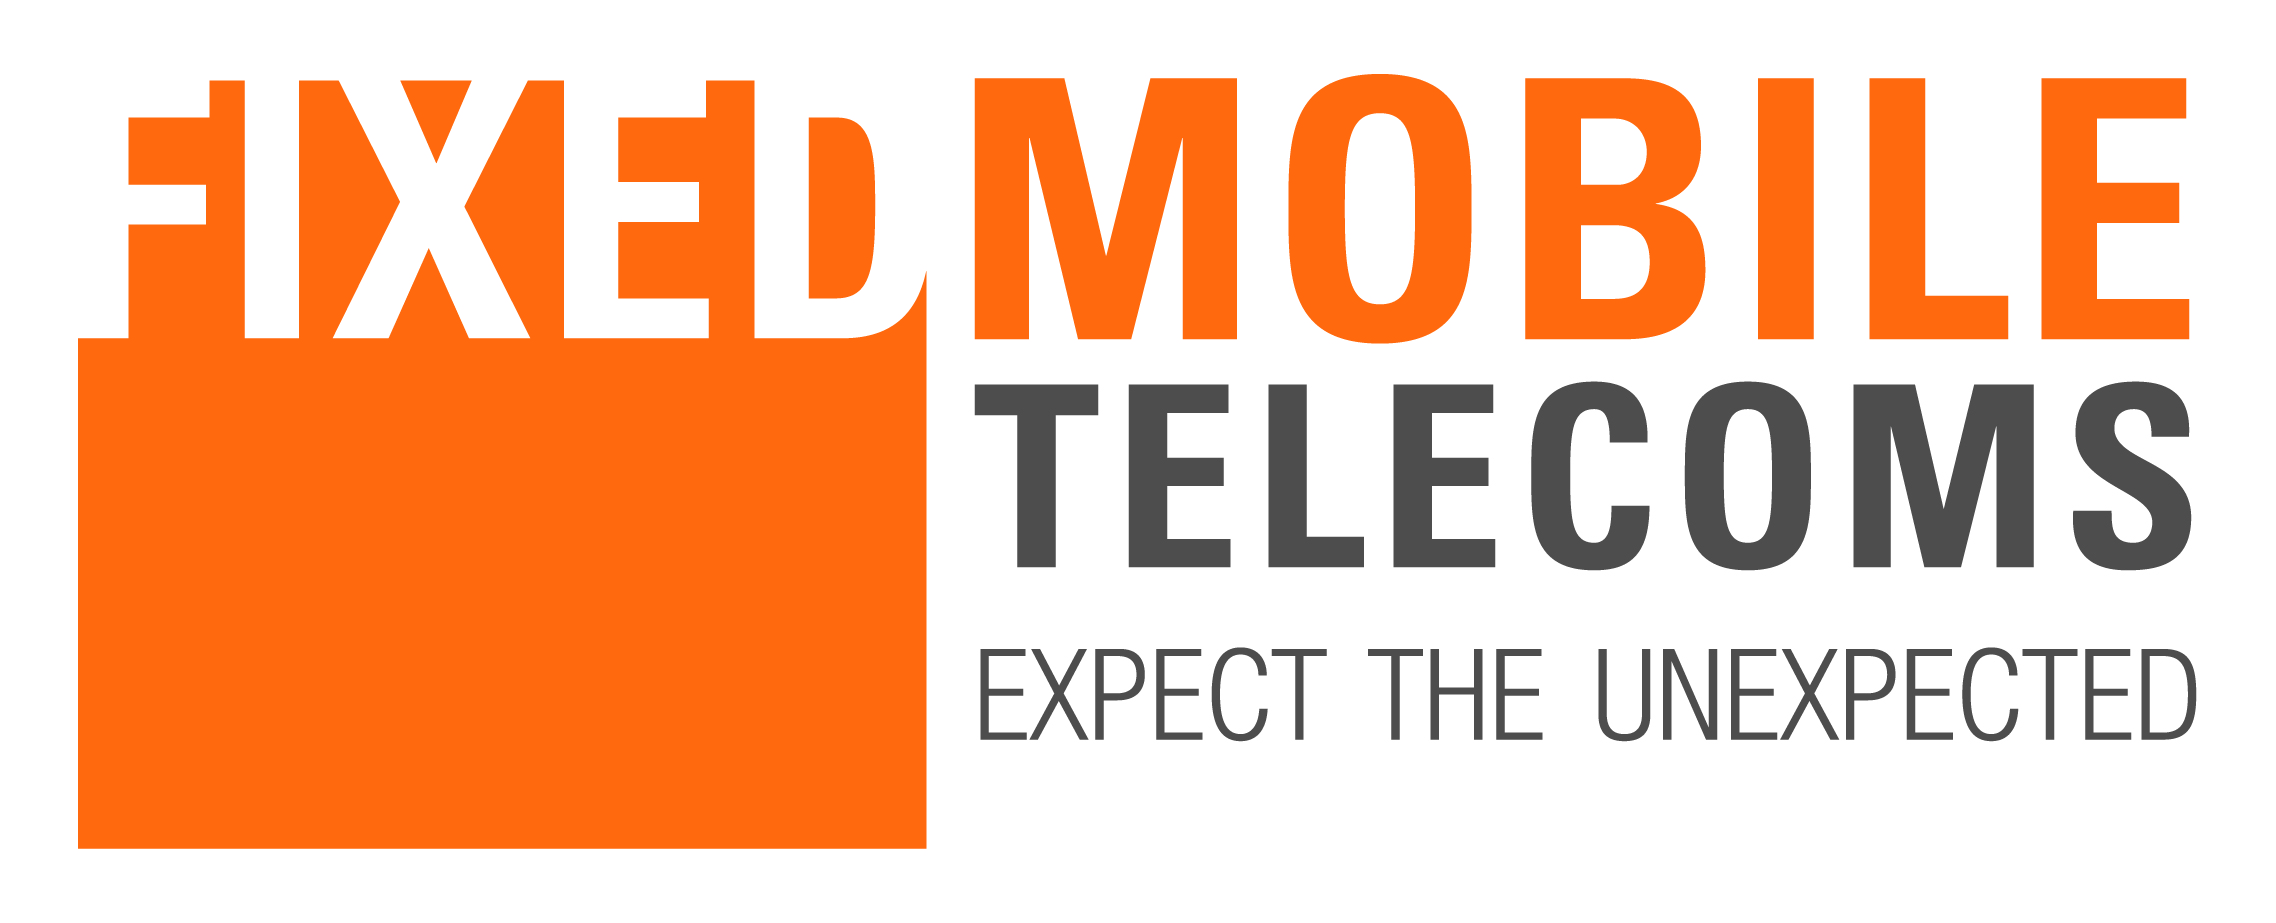 Fixed Mobile Telecoms